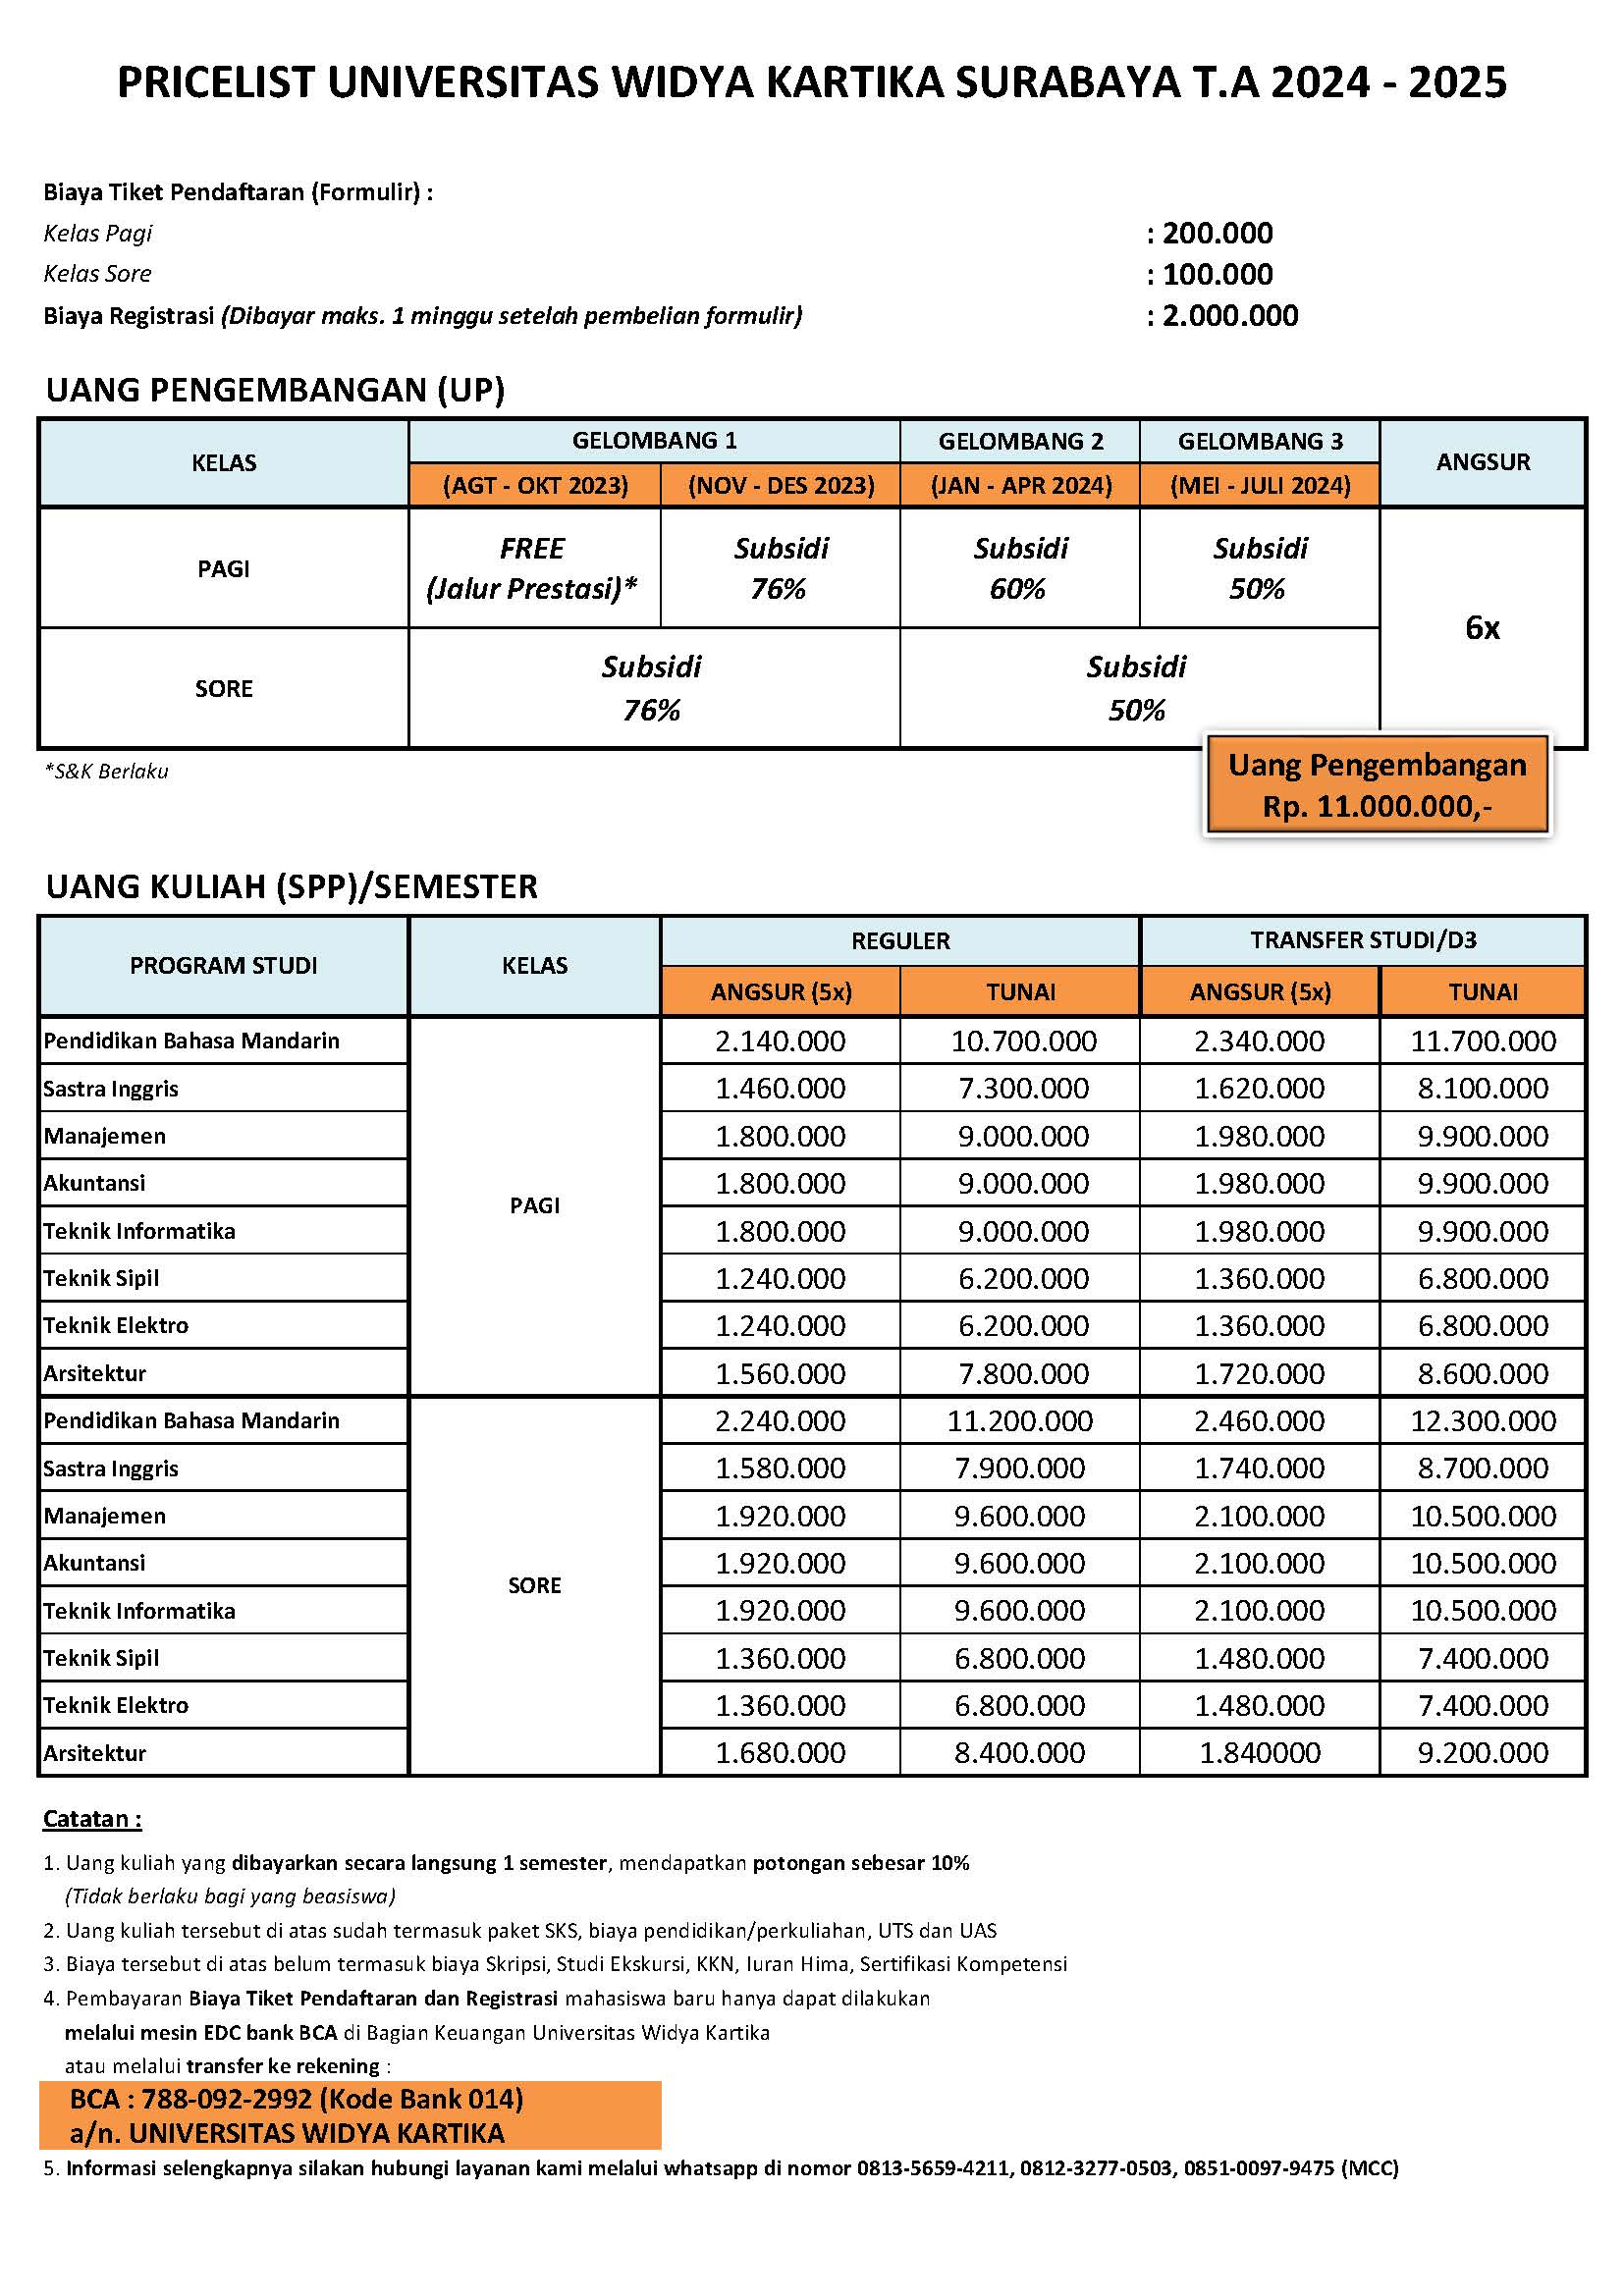 Pricelist 2024-2025 - Pusat Layanan Informasi UWIKA